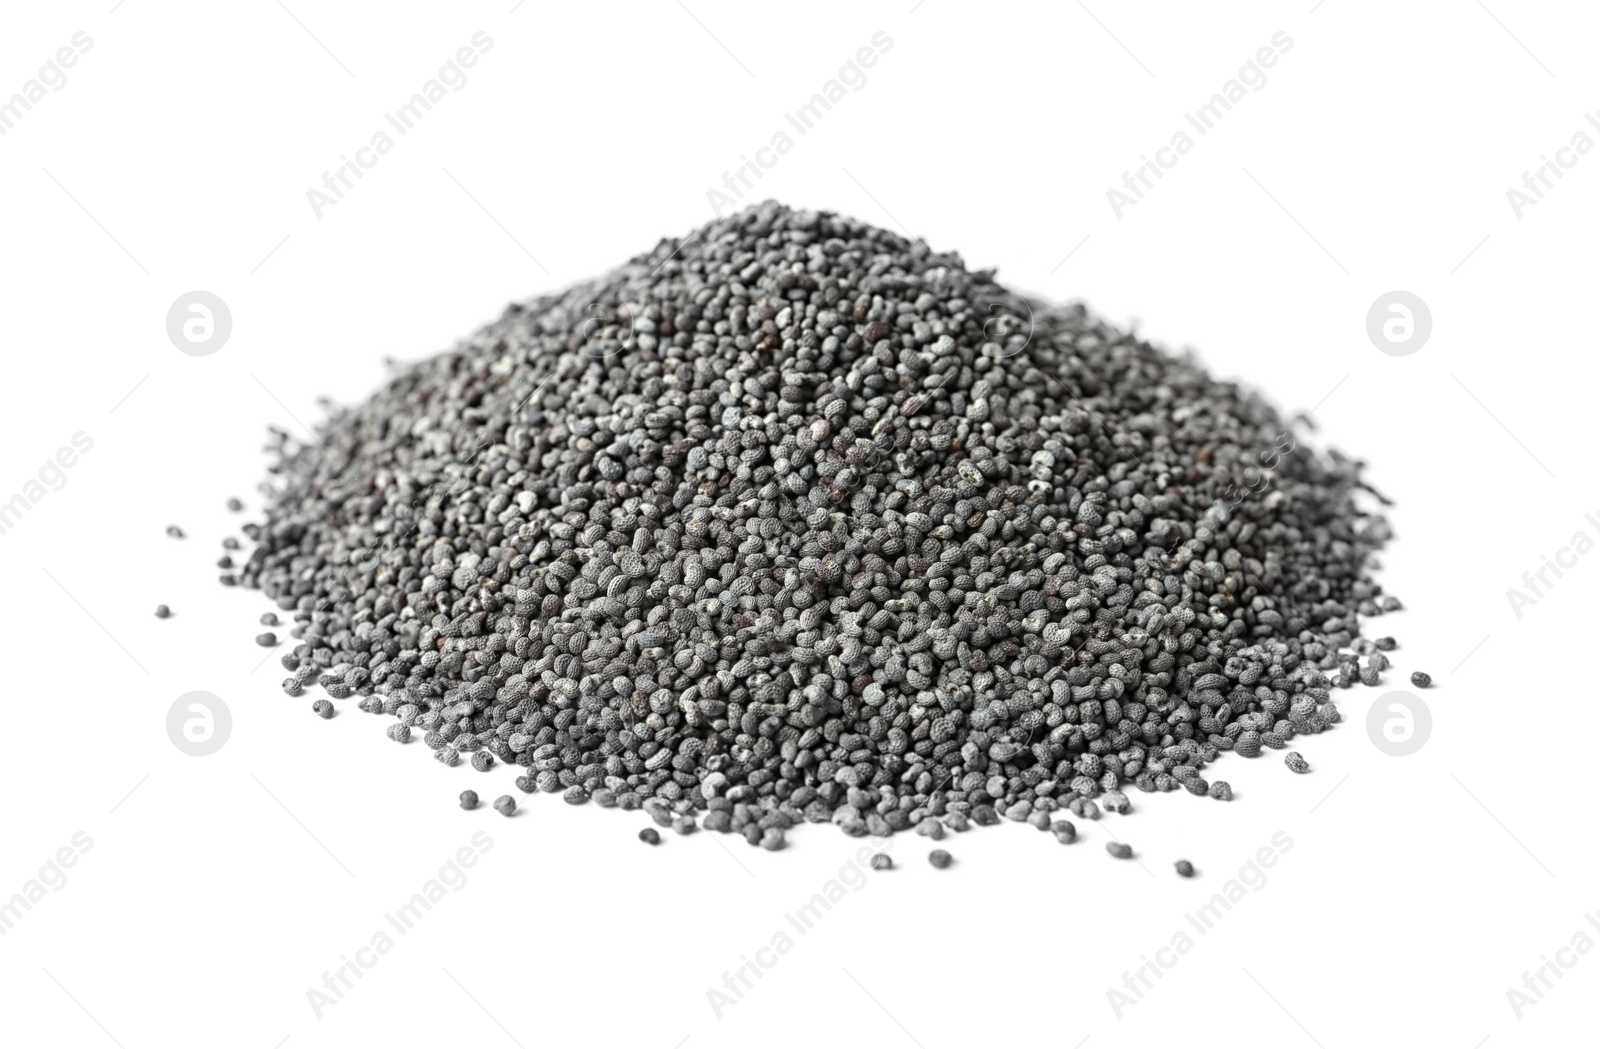 Photo of Pile of raw poppy seeds on white background